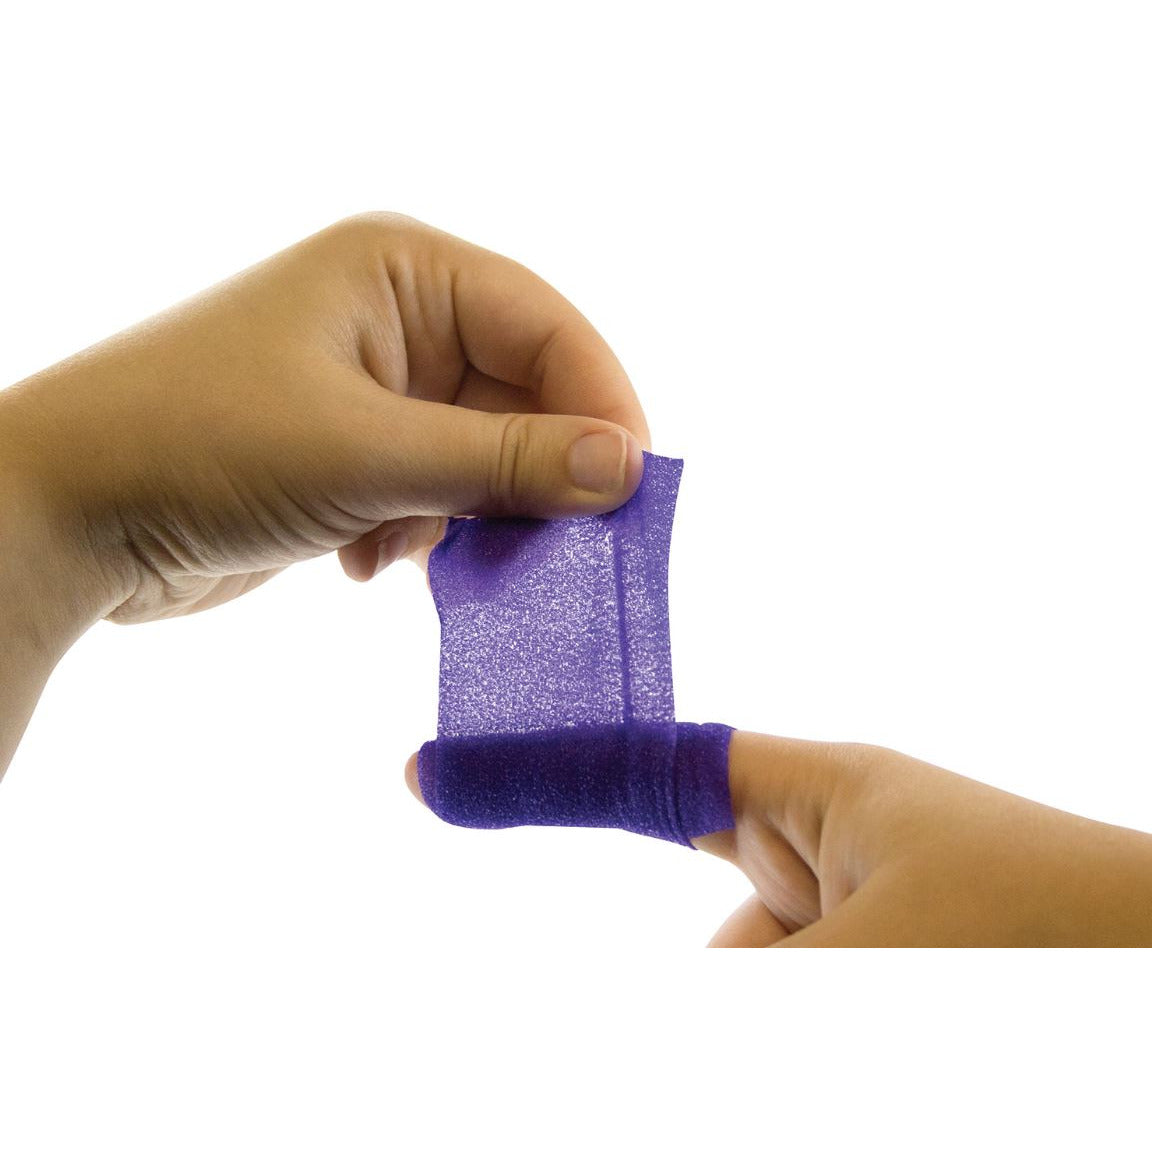 Easiplaster Self-Adhesive Plaster Tape 6cm x 5m - Purple